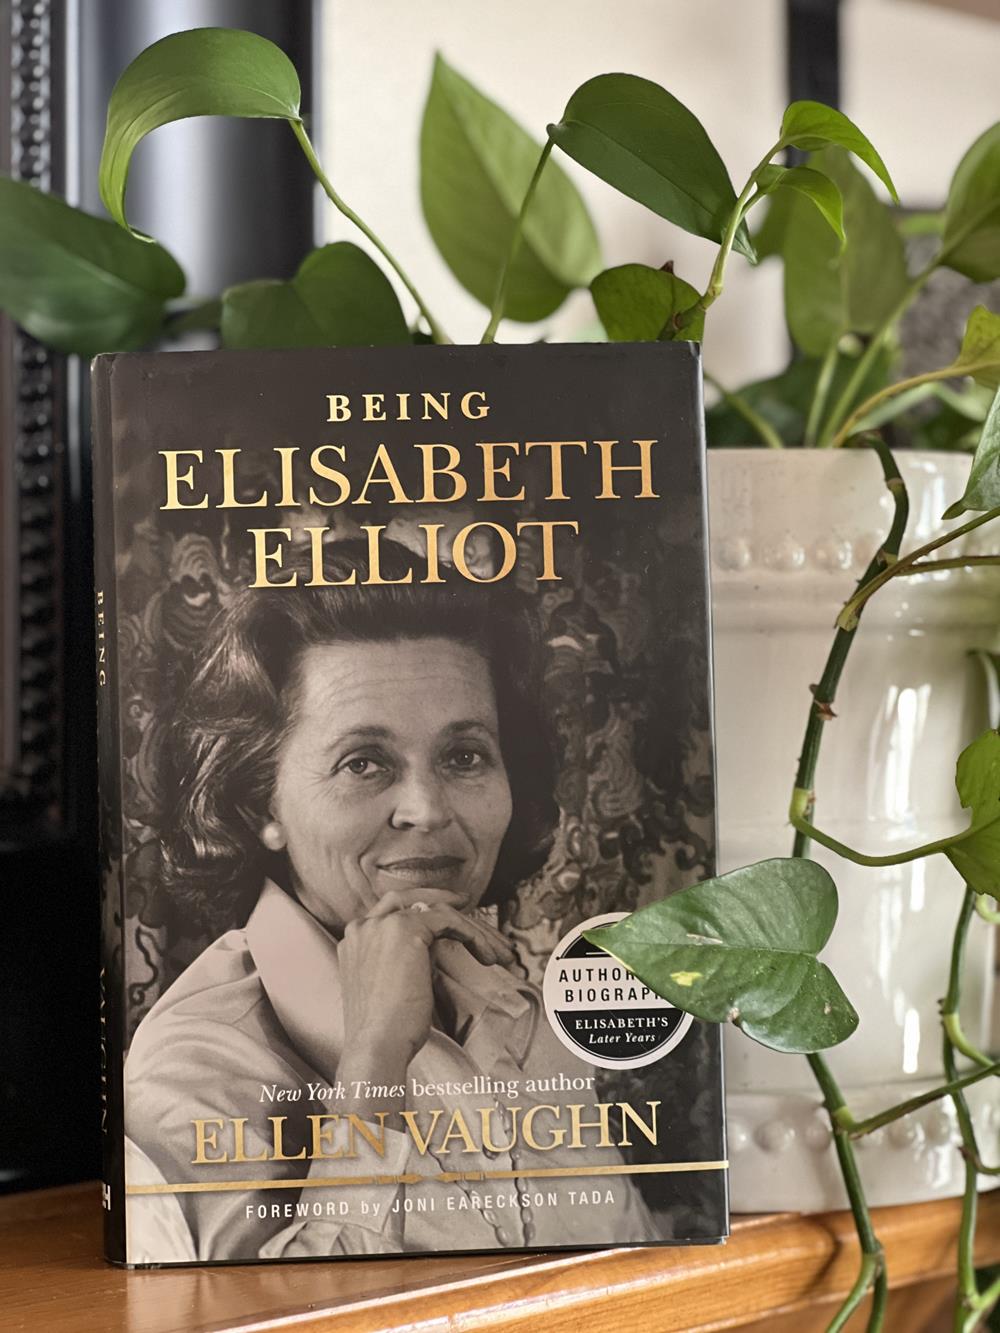 Elisabeth Elliot book next to a plant